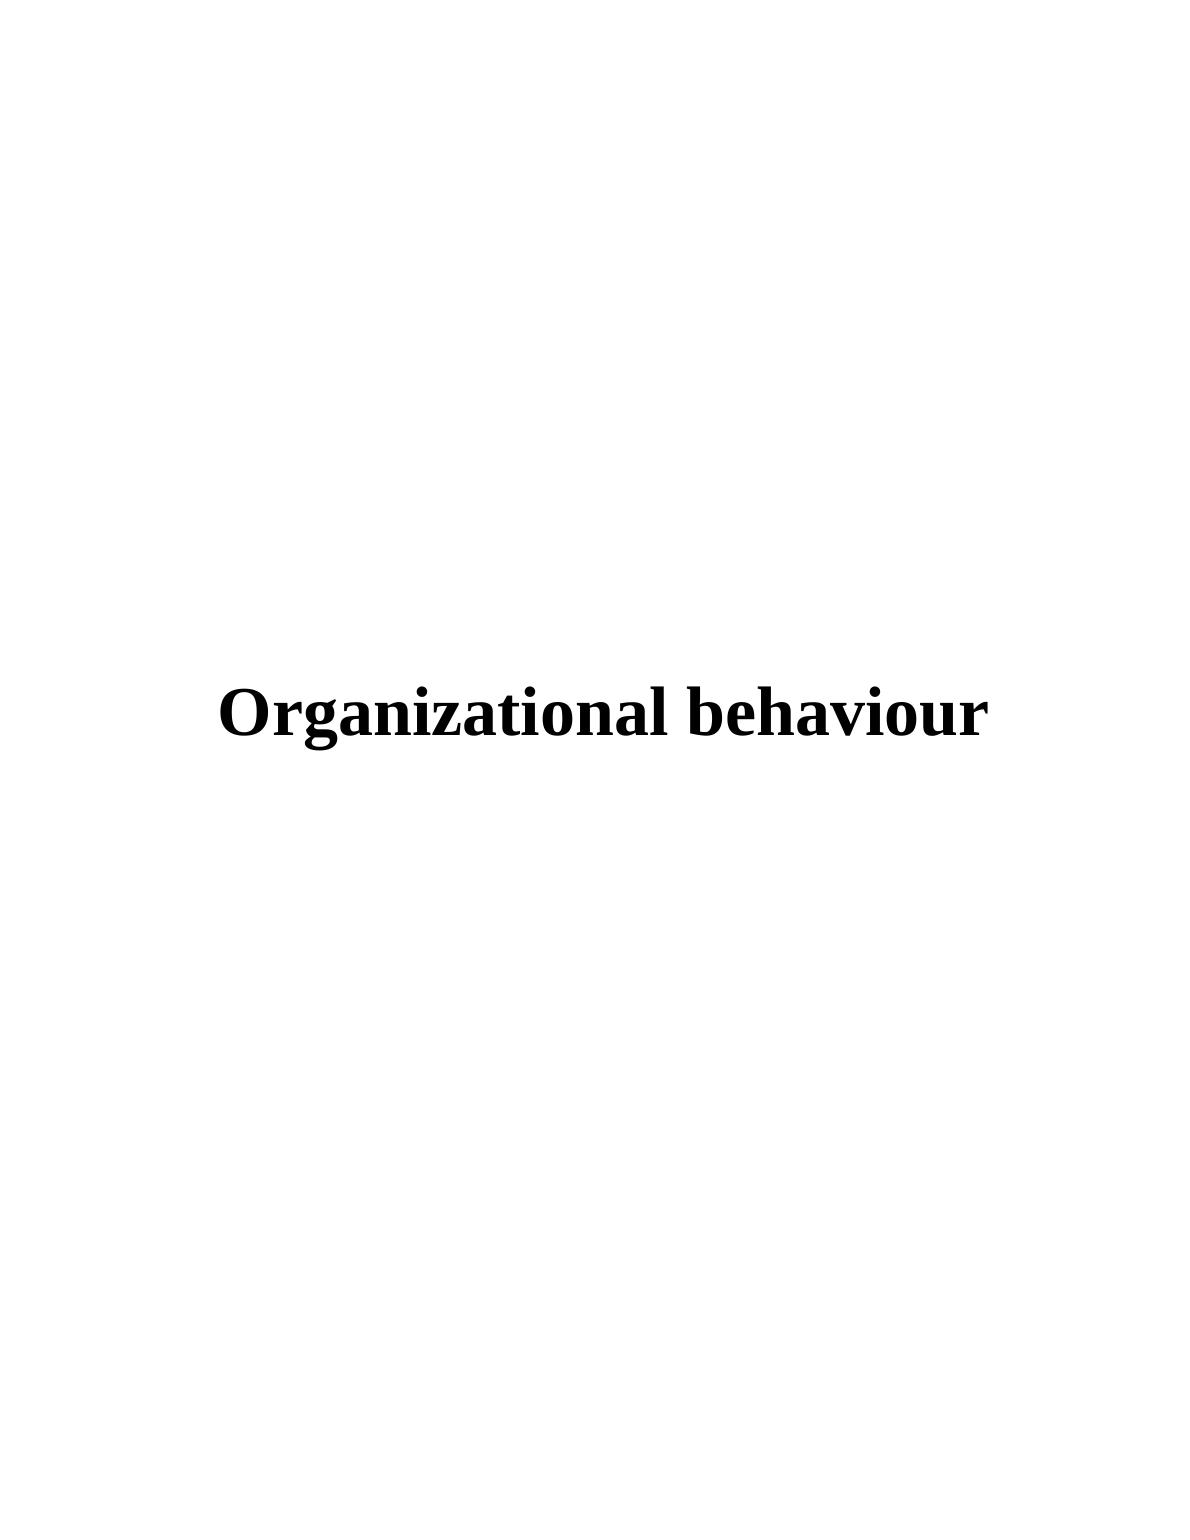 Organizational Behaviour at BBC_1